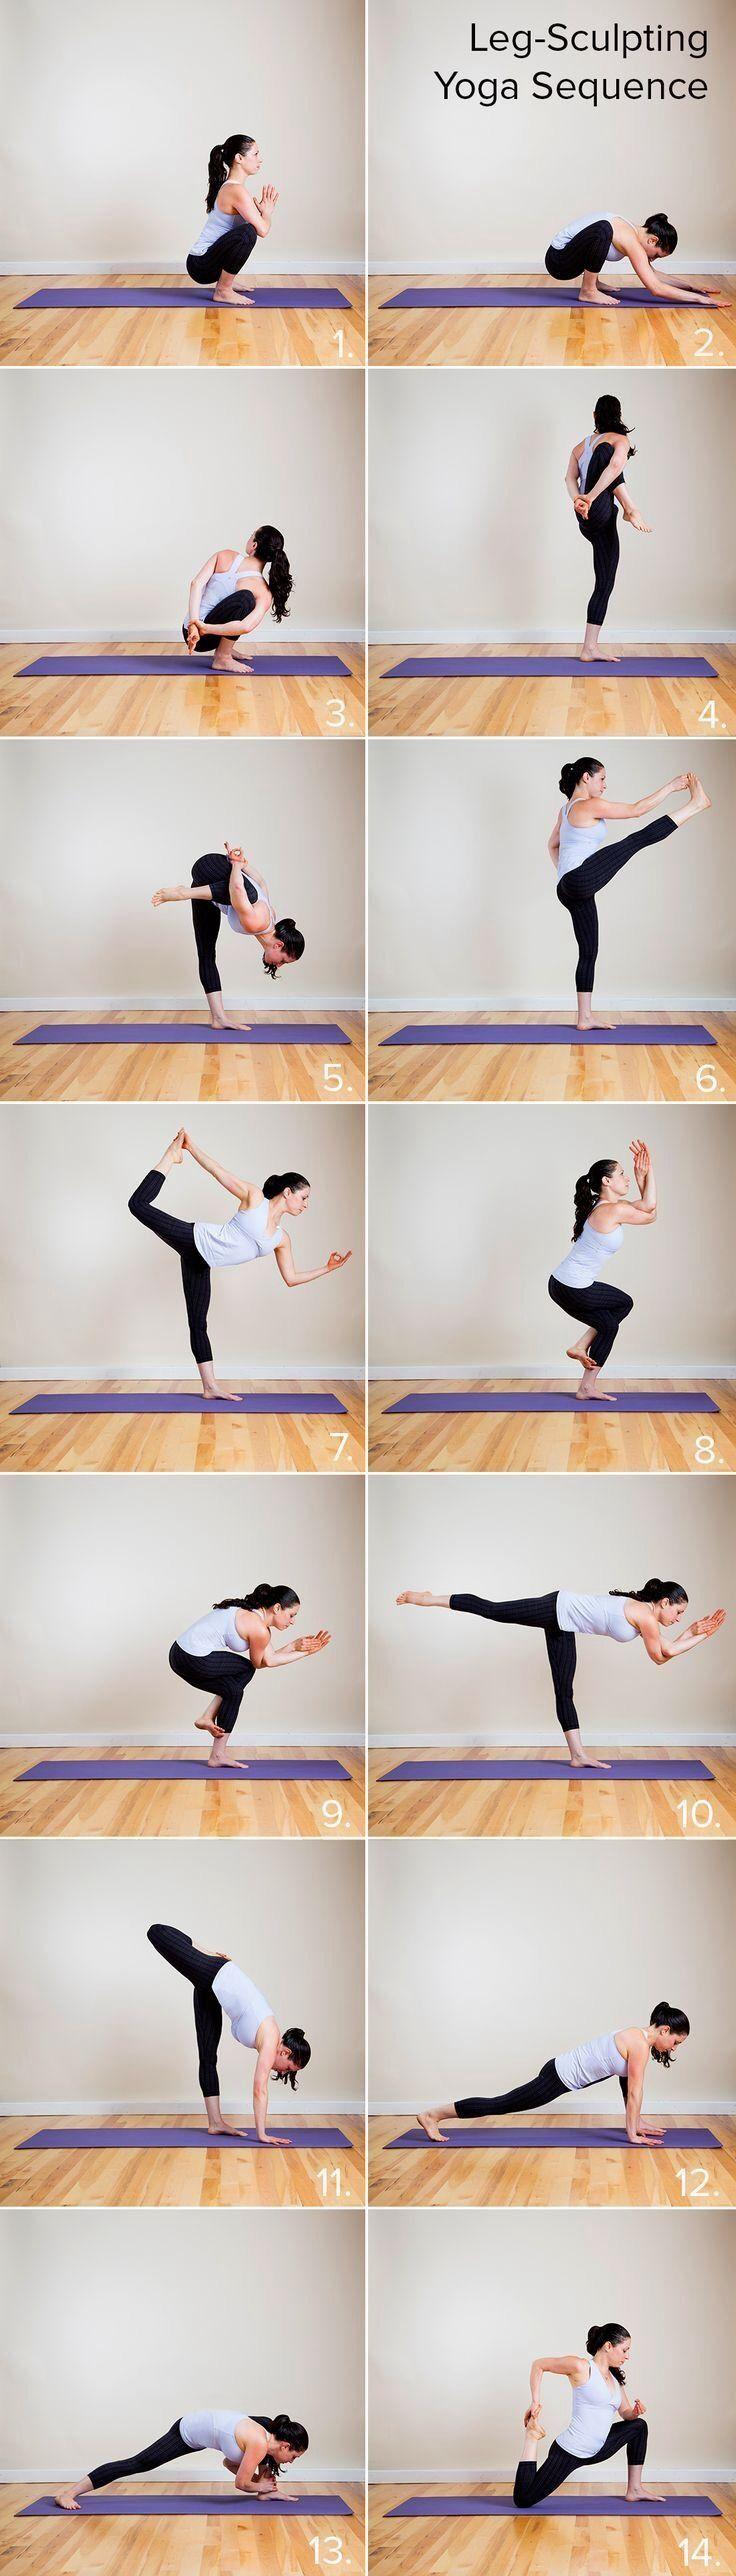 زفاف - Holy Hot! Yoga Sequence To Do Your Tight Pants Justice